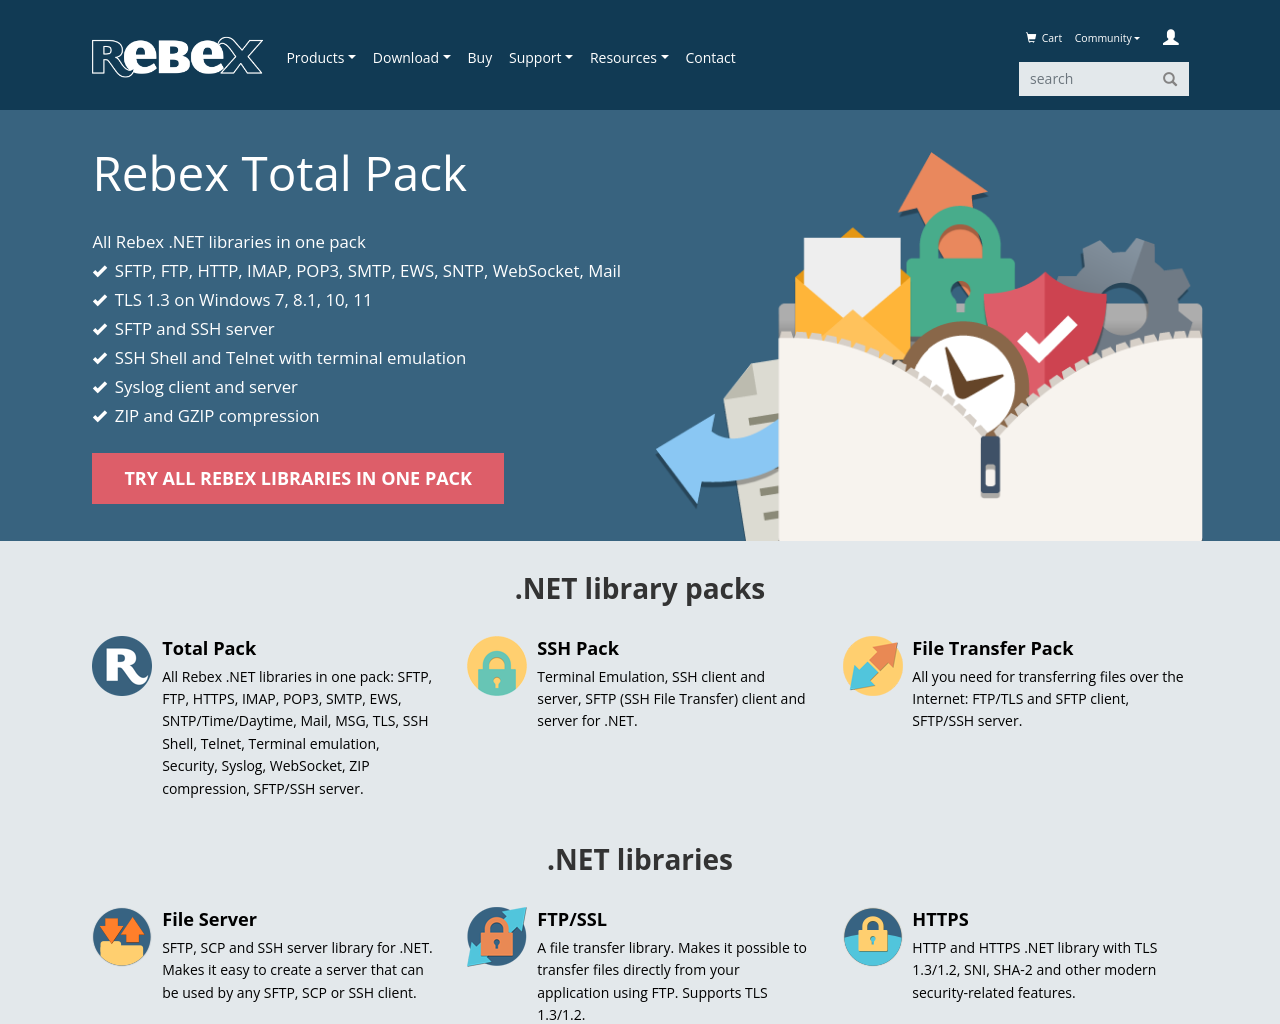 rebex.net